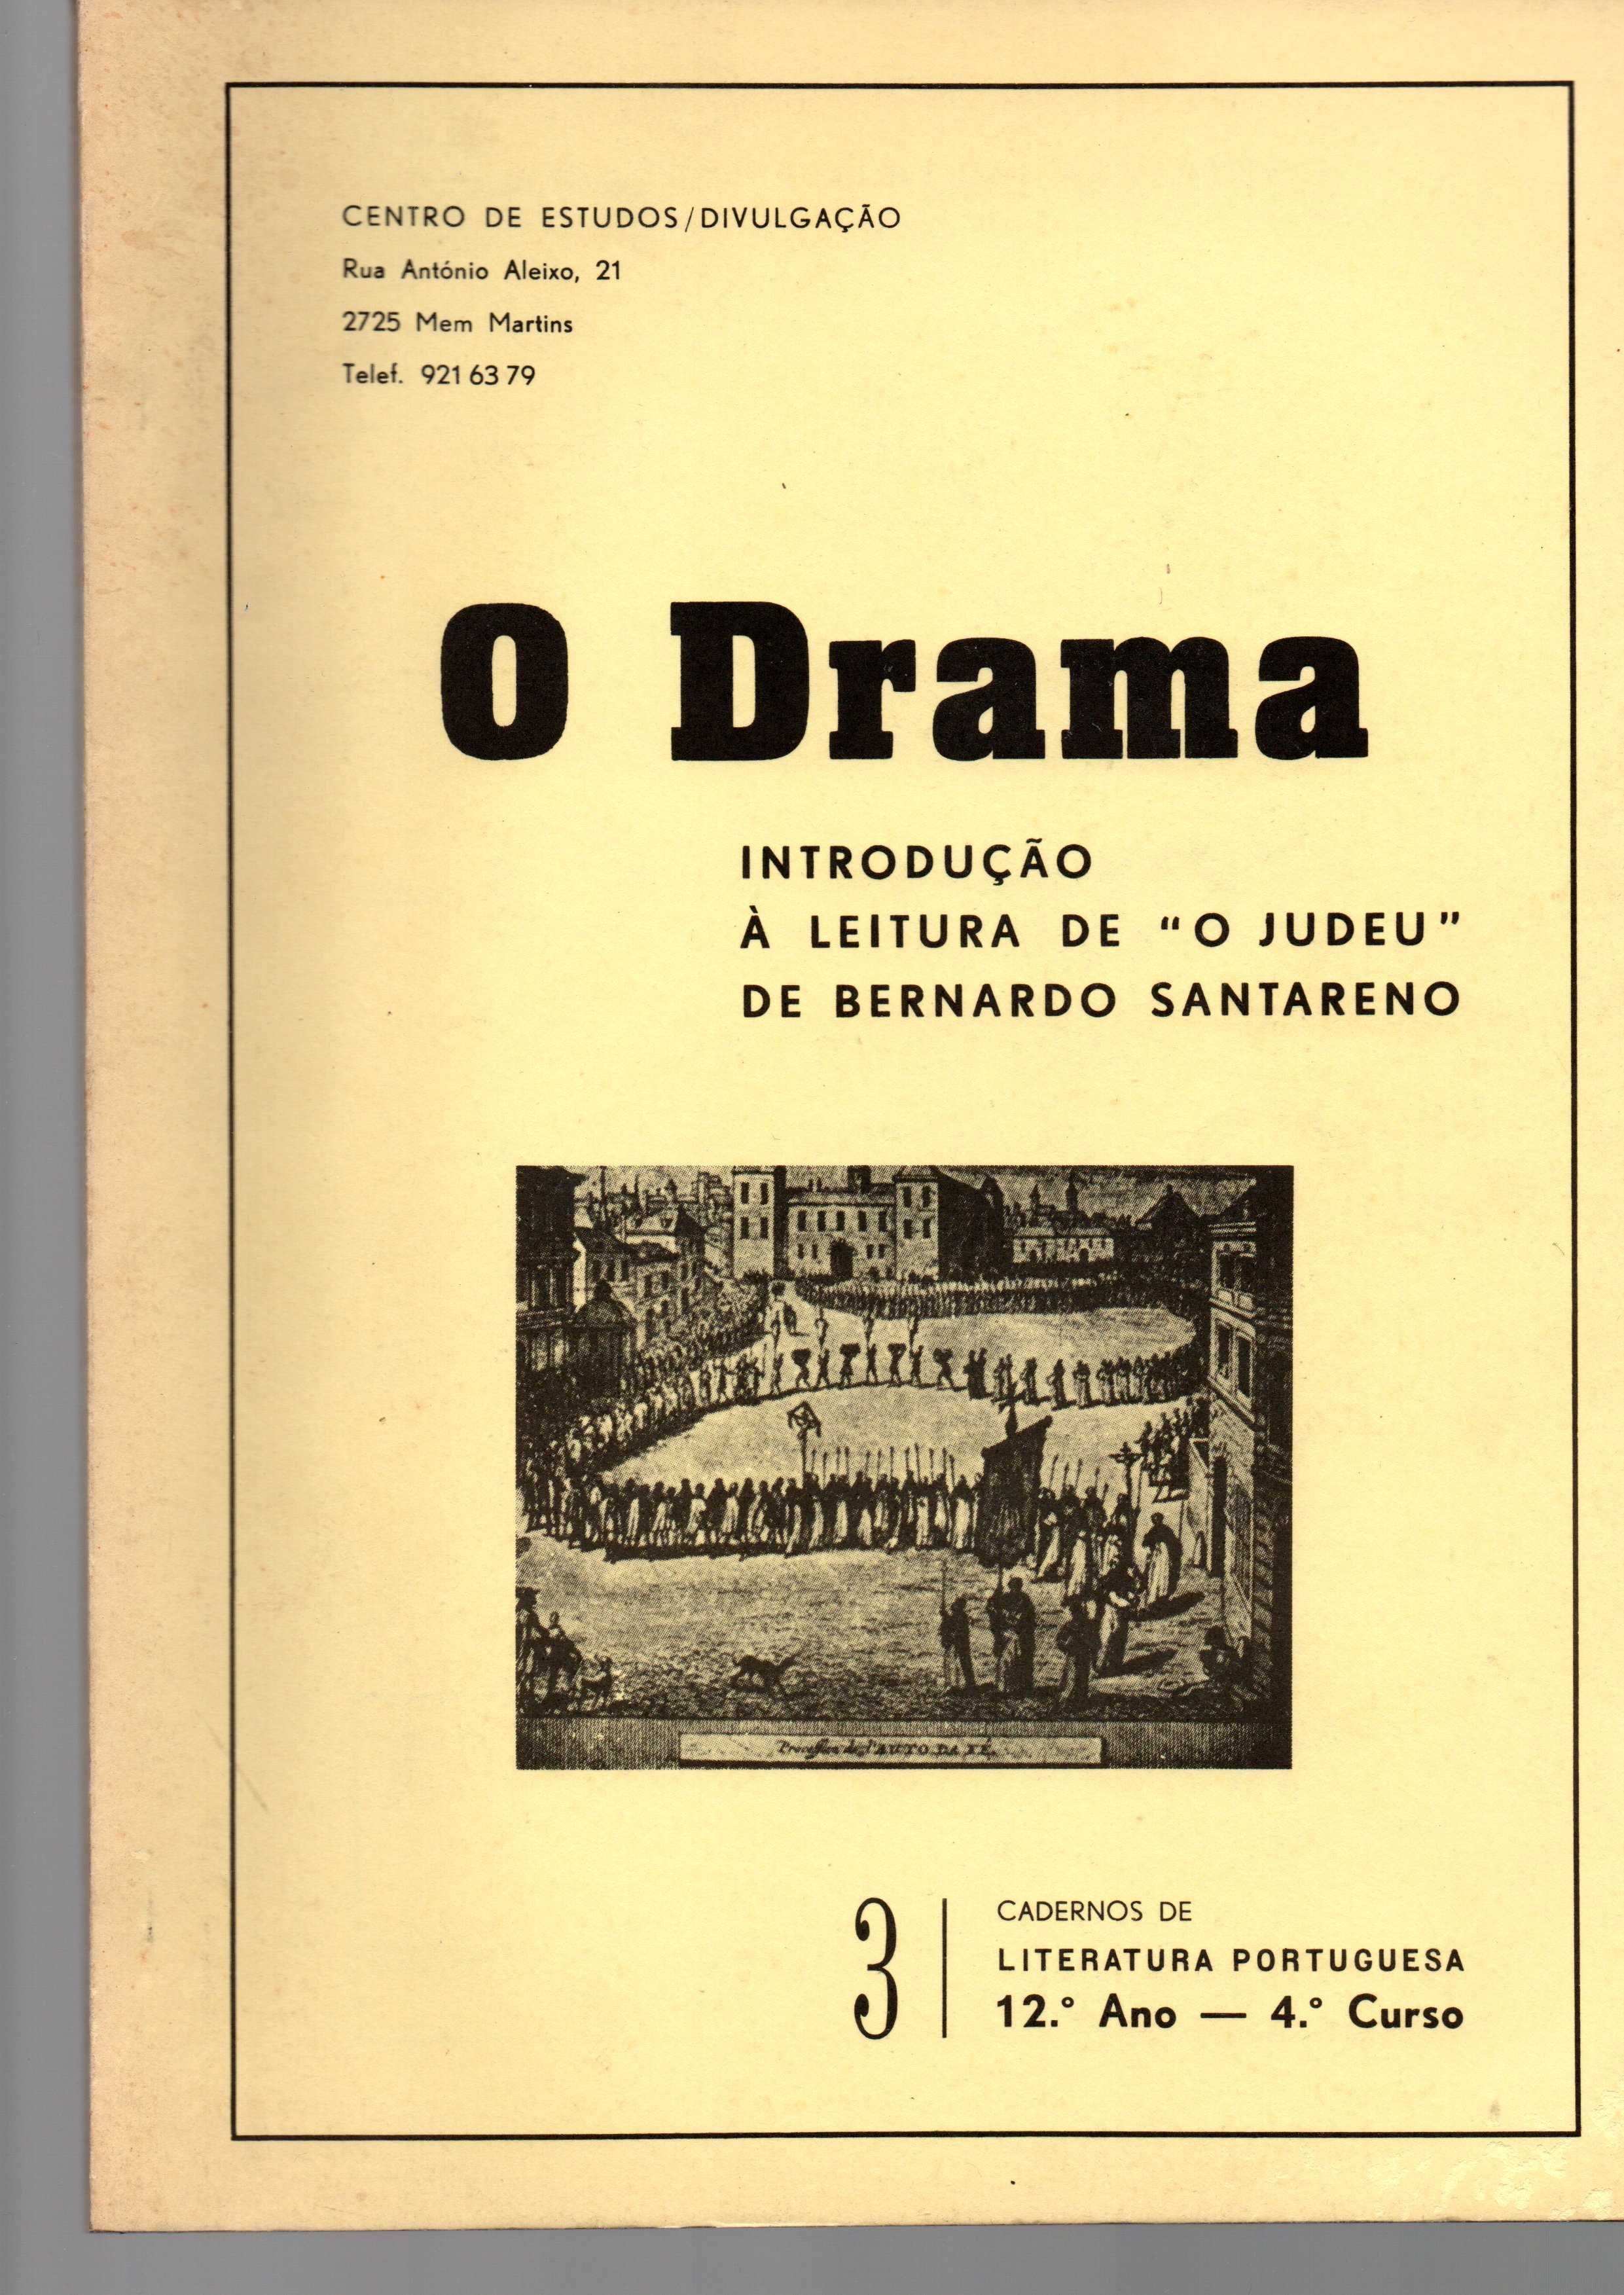 Cadernos de Literatura Portuguesa